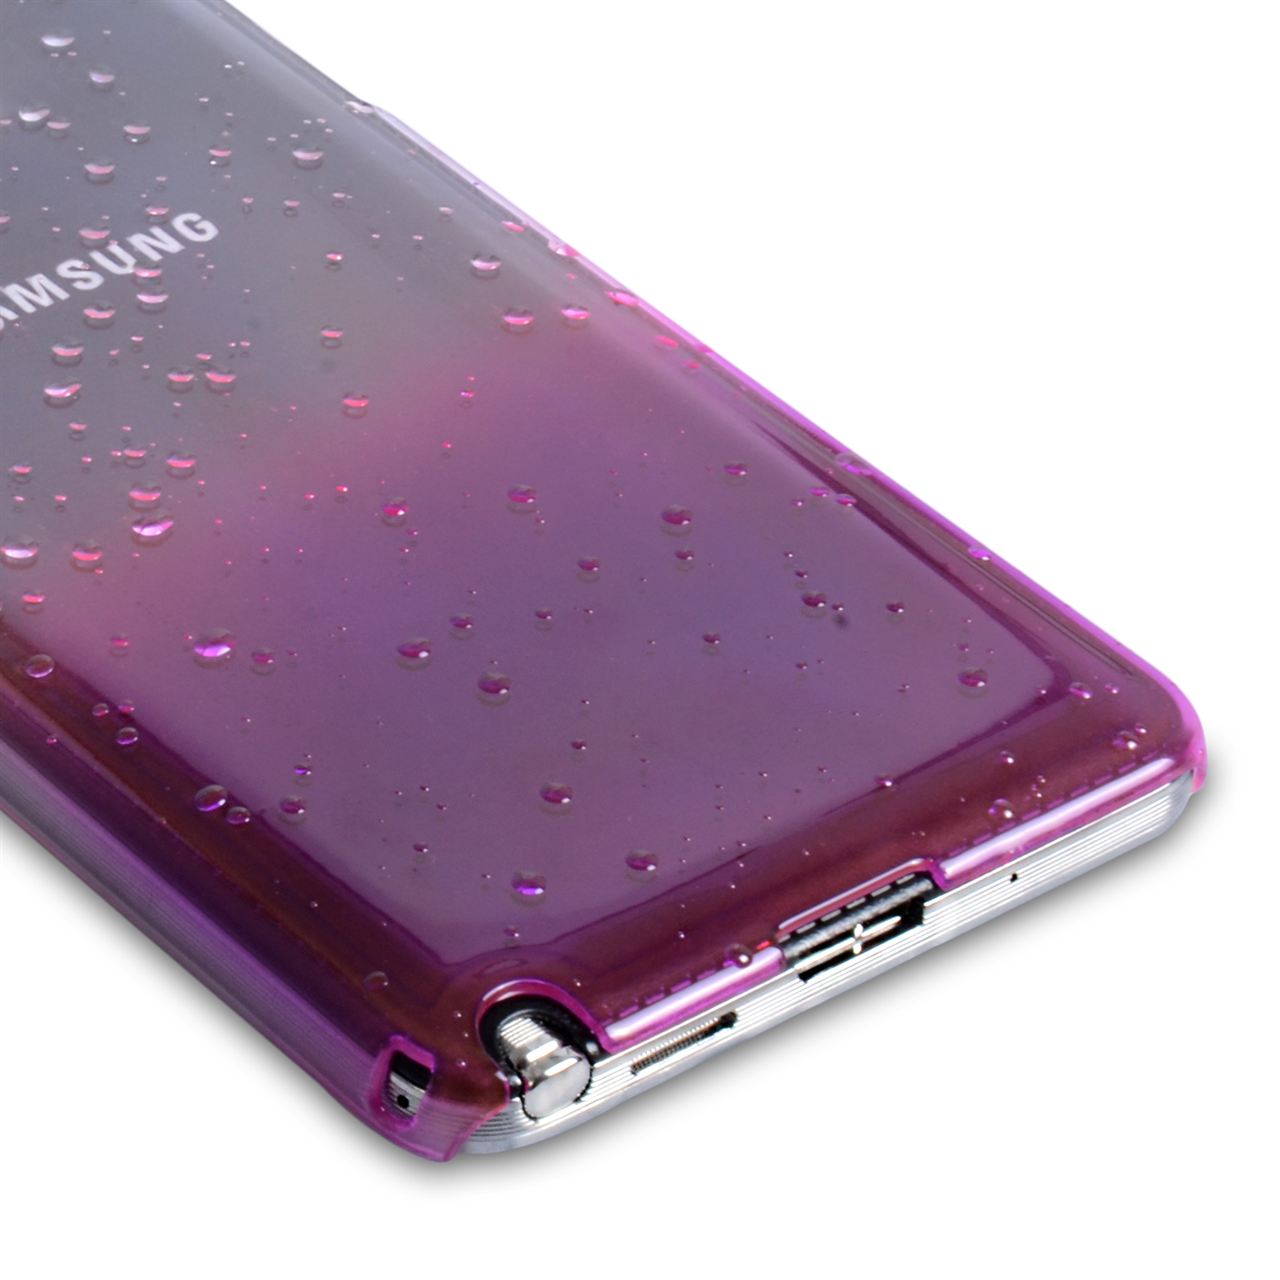 YouSave Accessories Samsung Galaxy Note 3 Waterdrop Hard Case - Purple